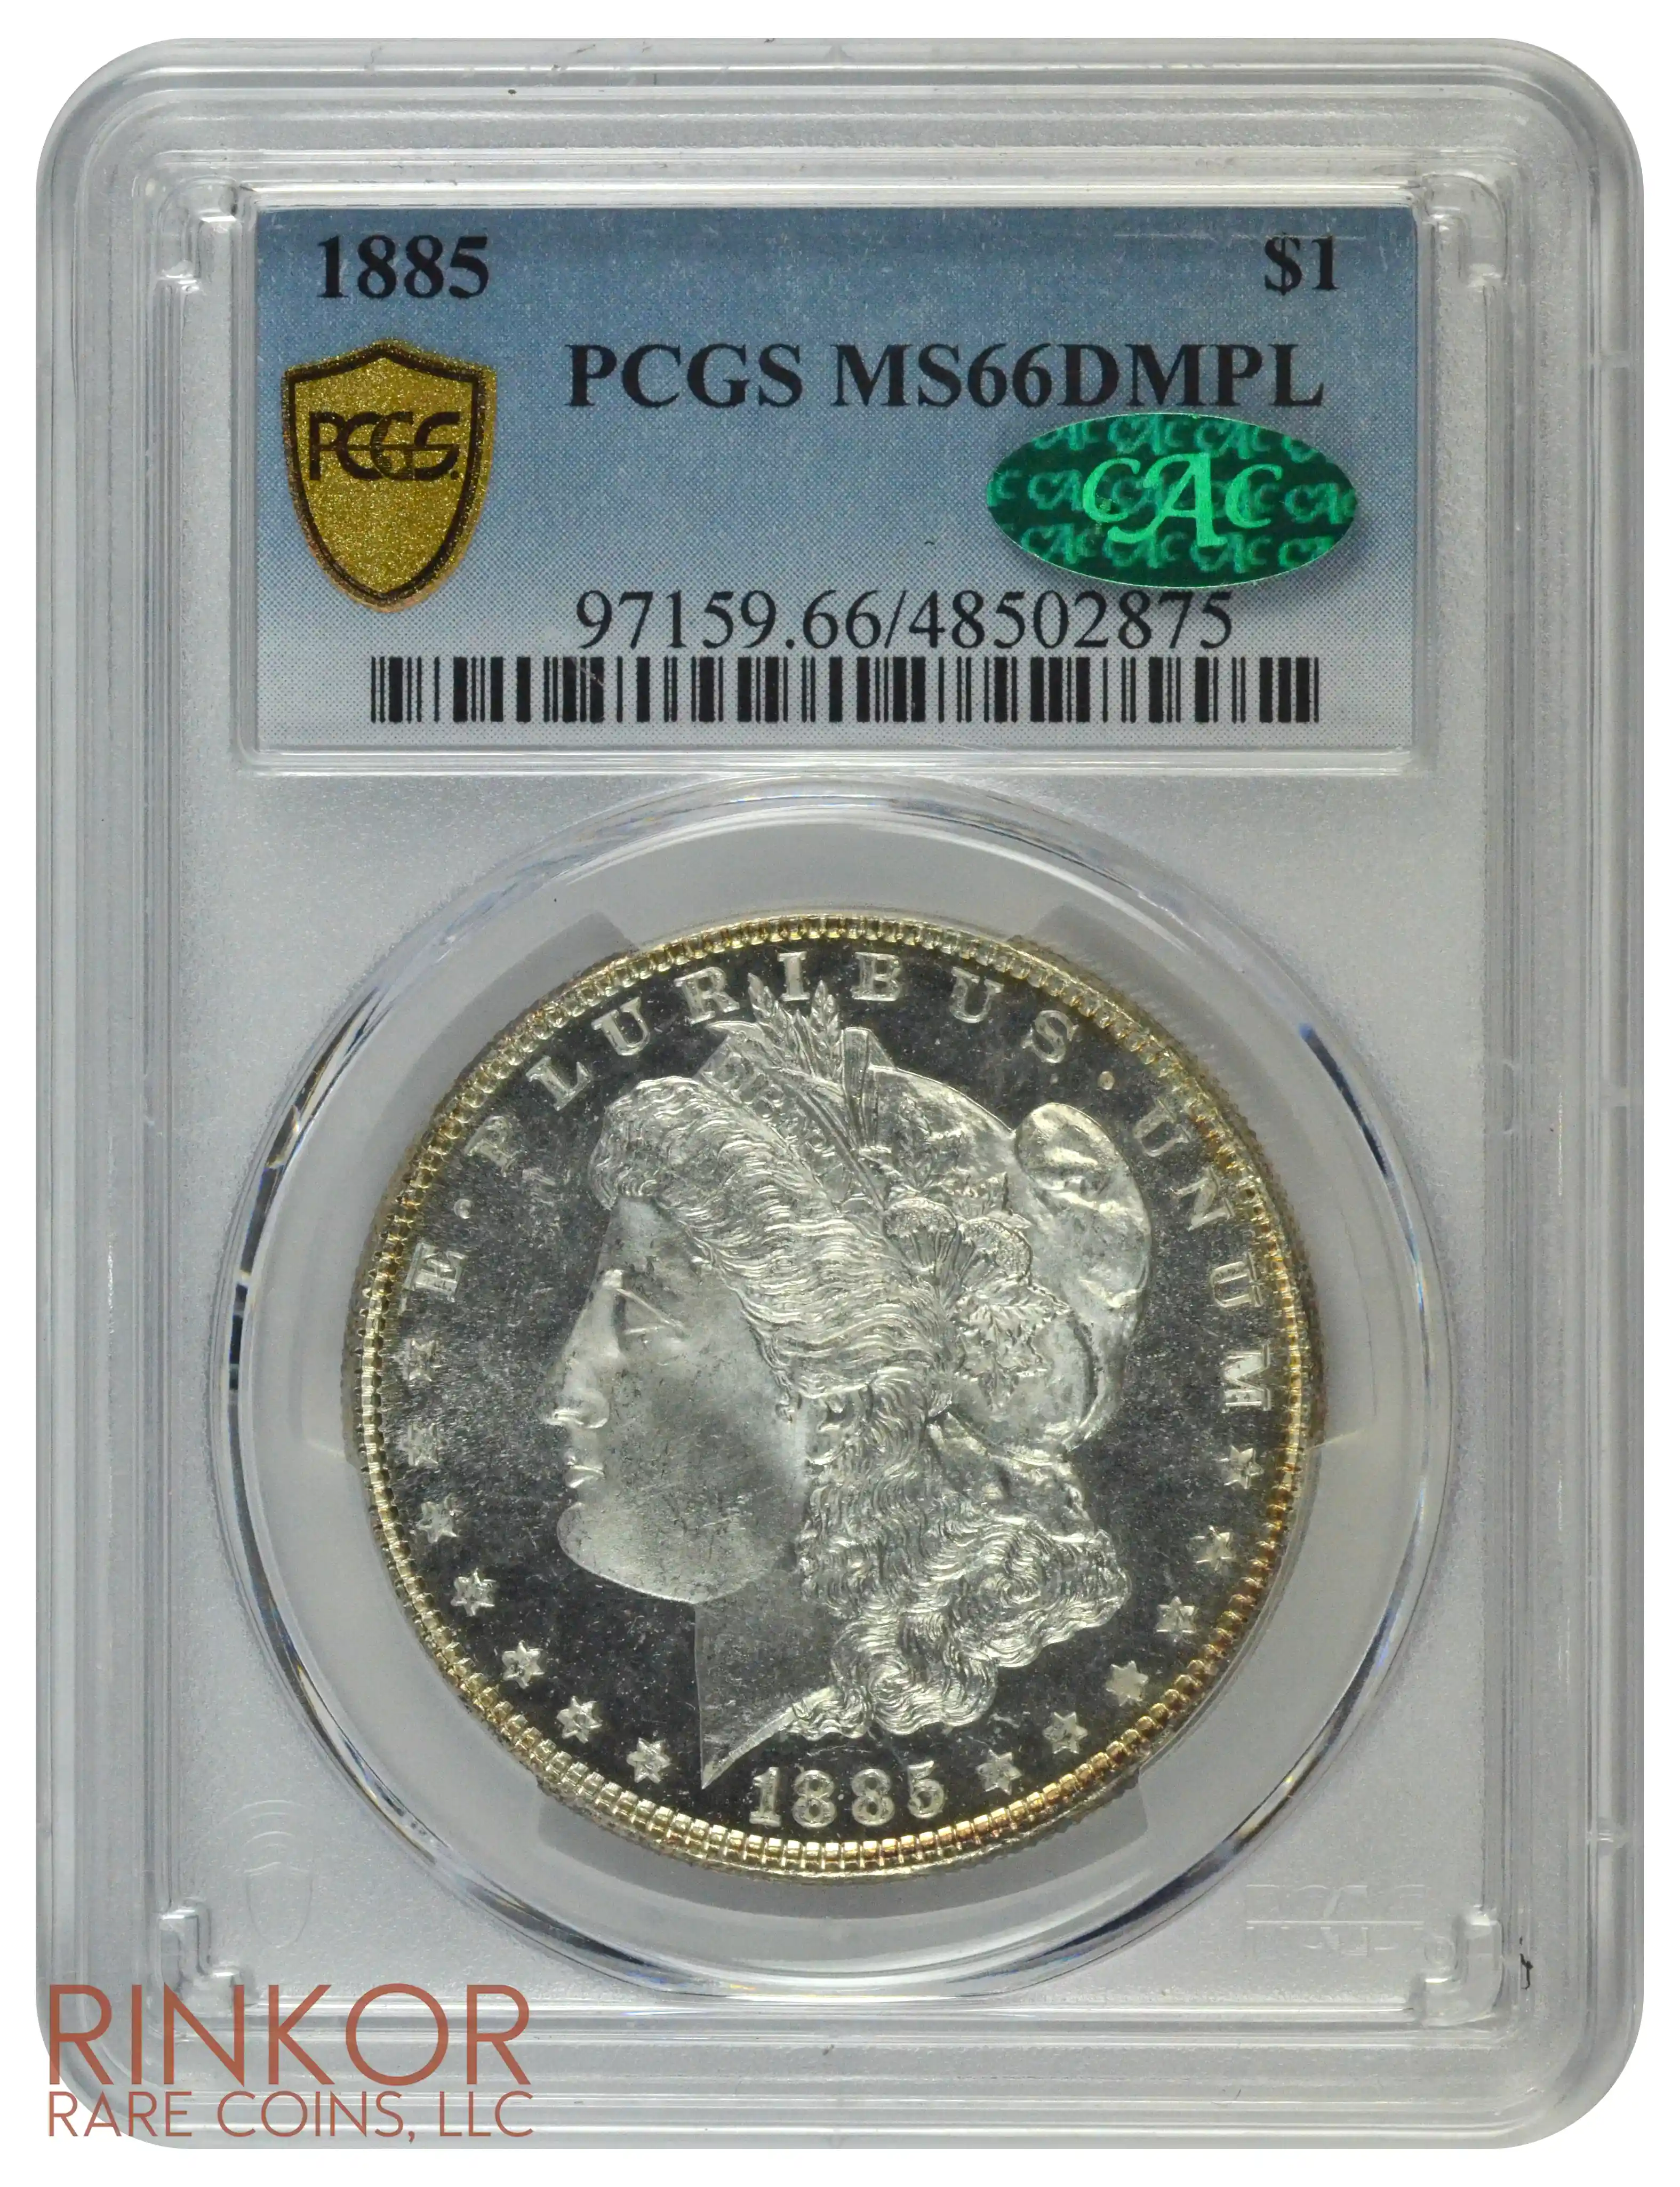 1885 $1 PCGS MS 66 DMPL CAC